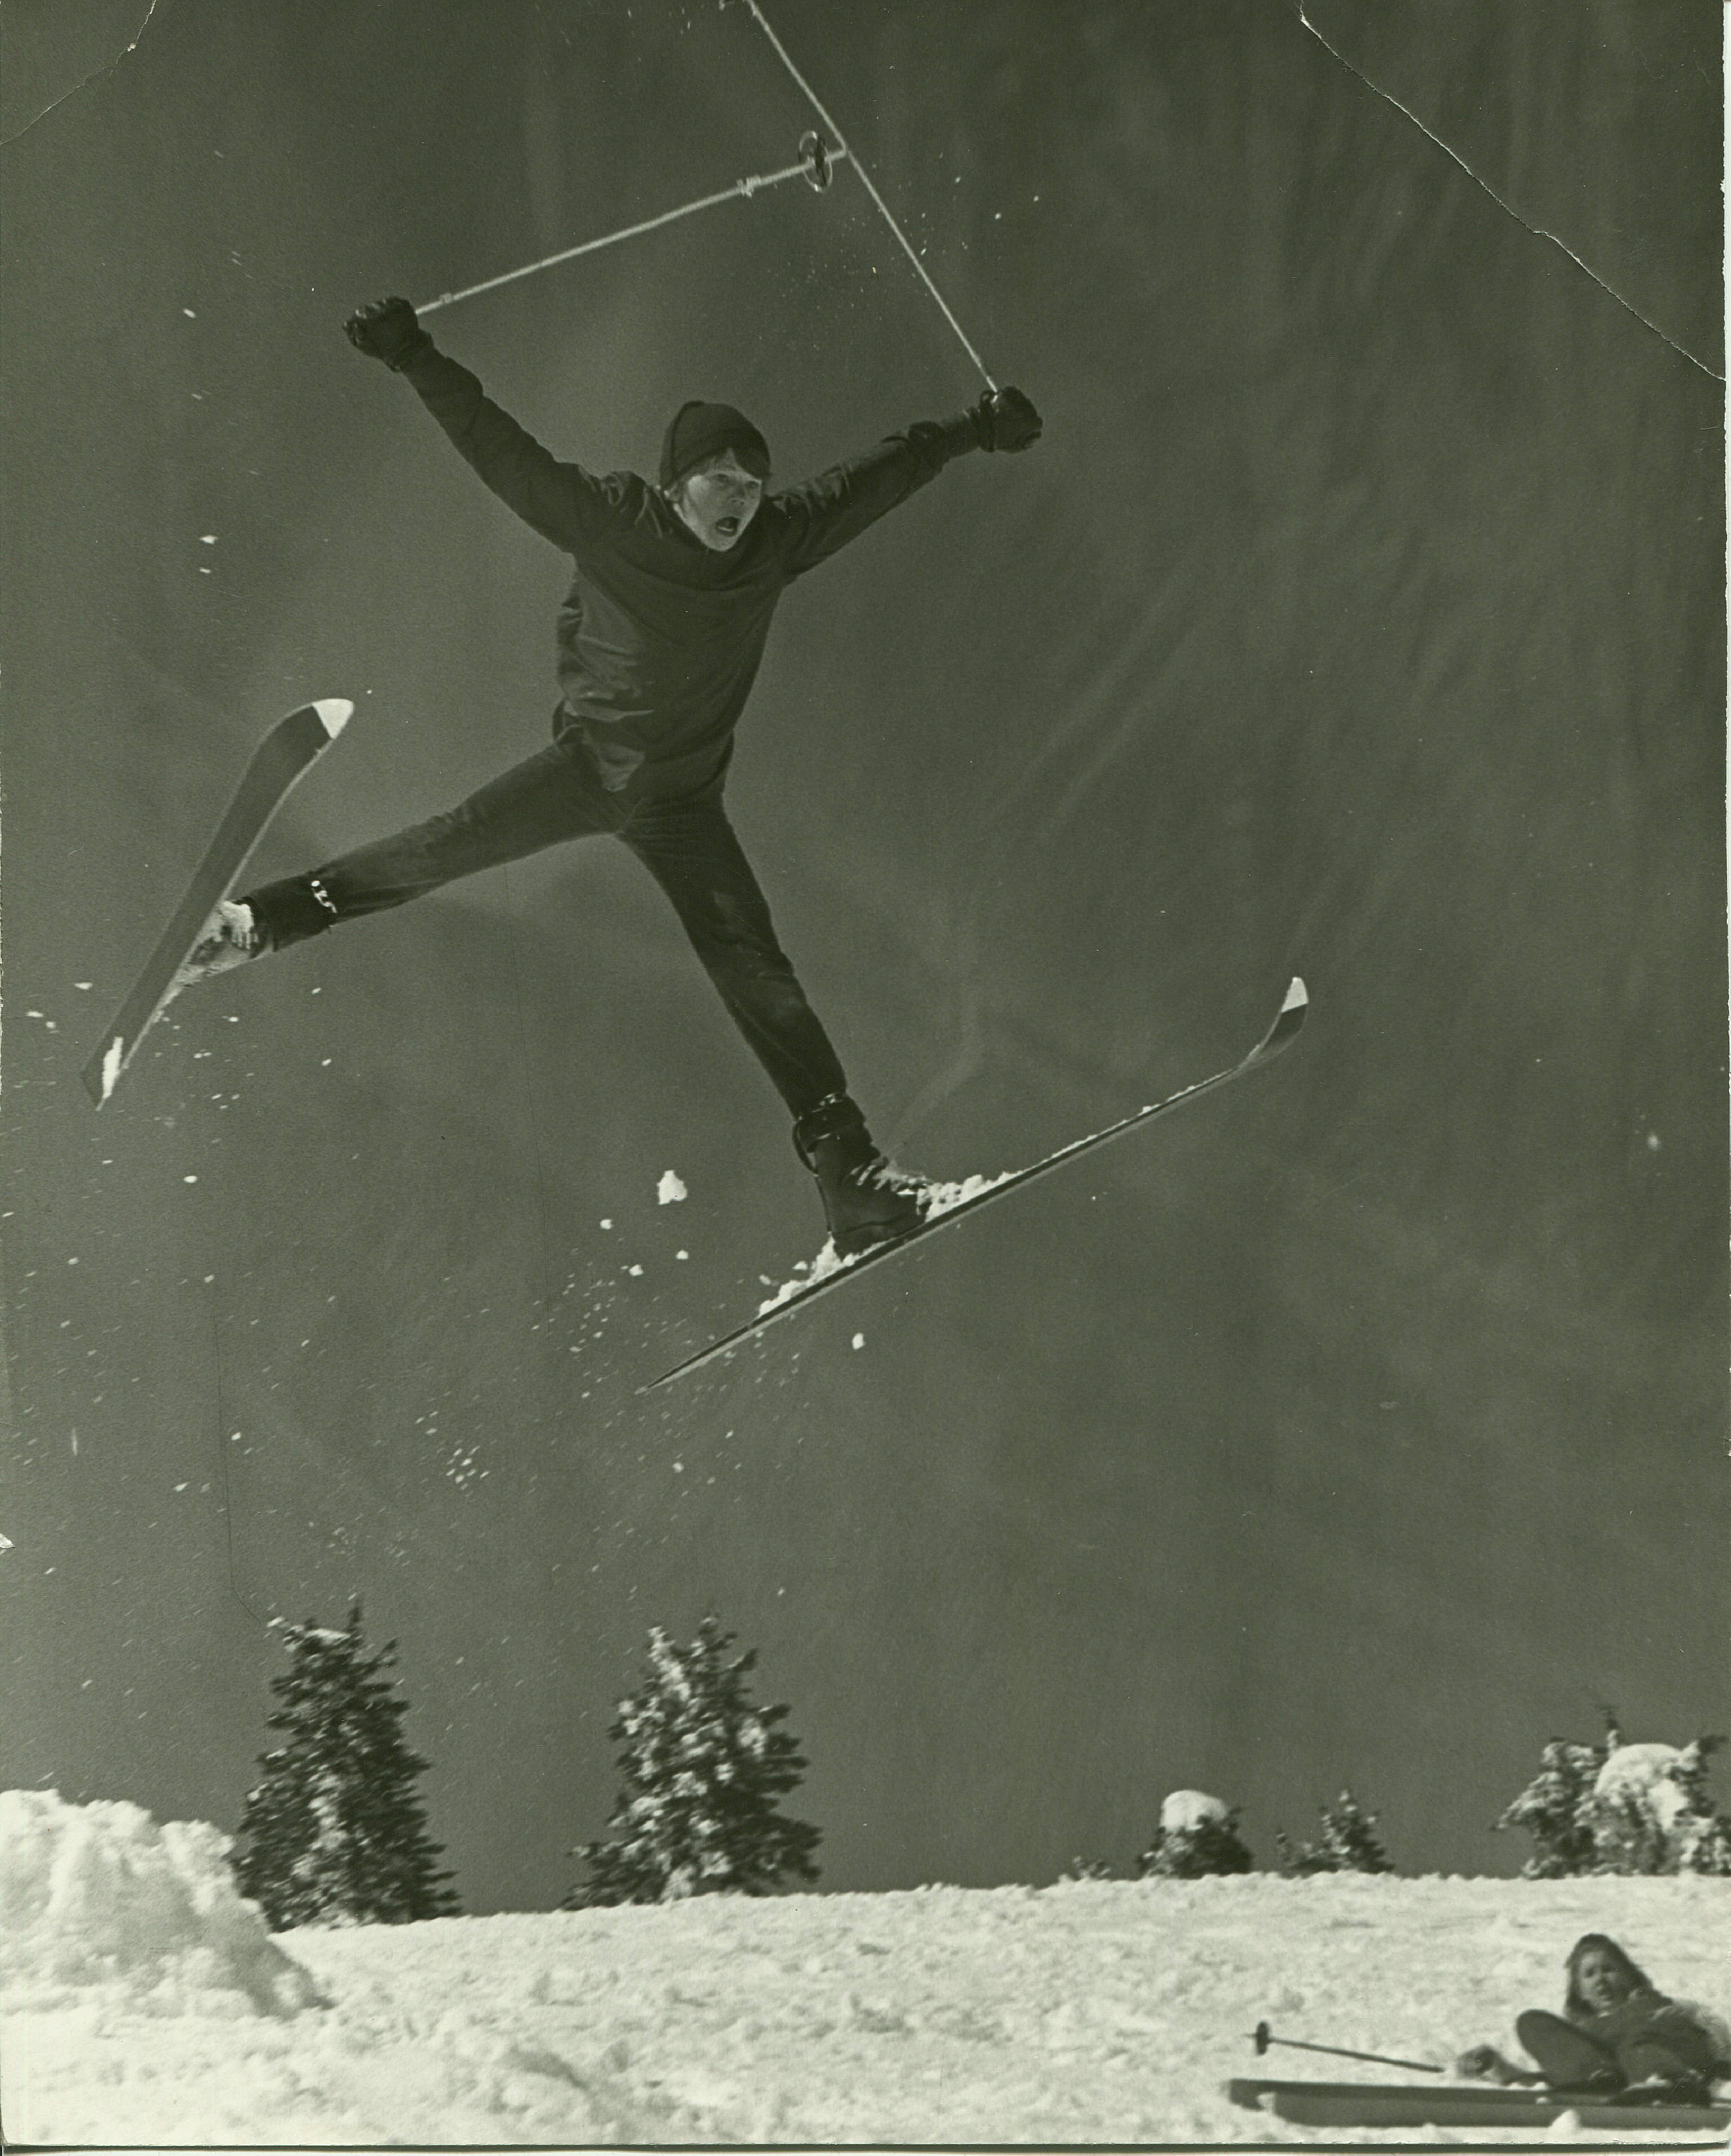 Old jump photo